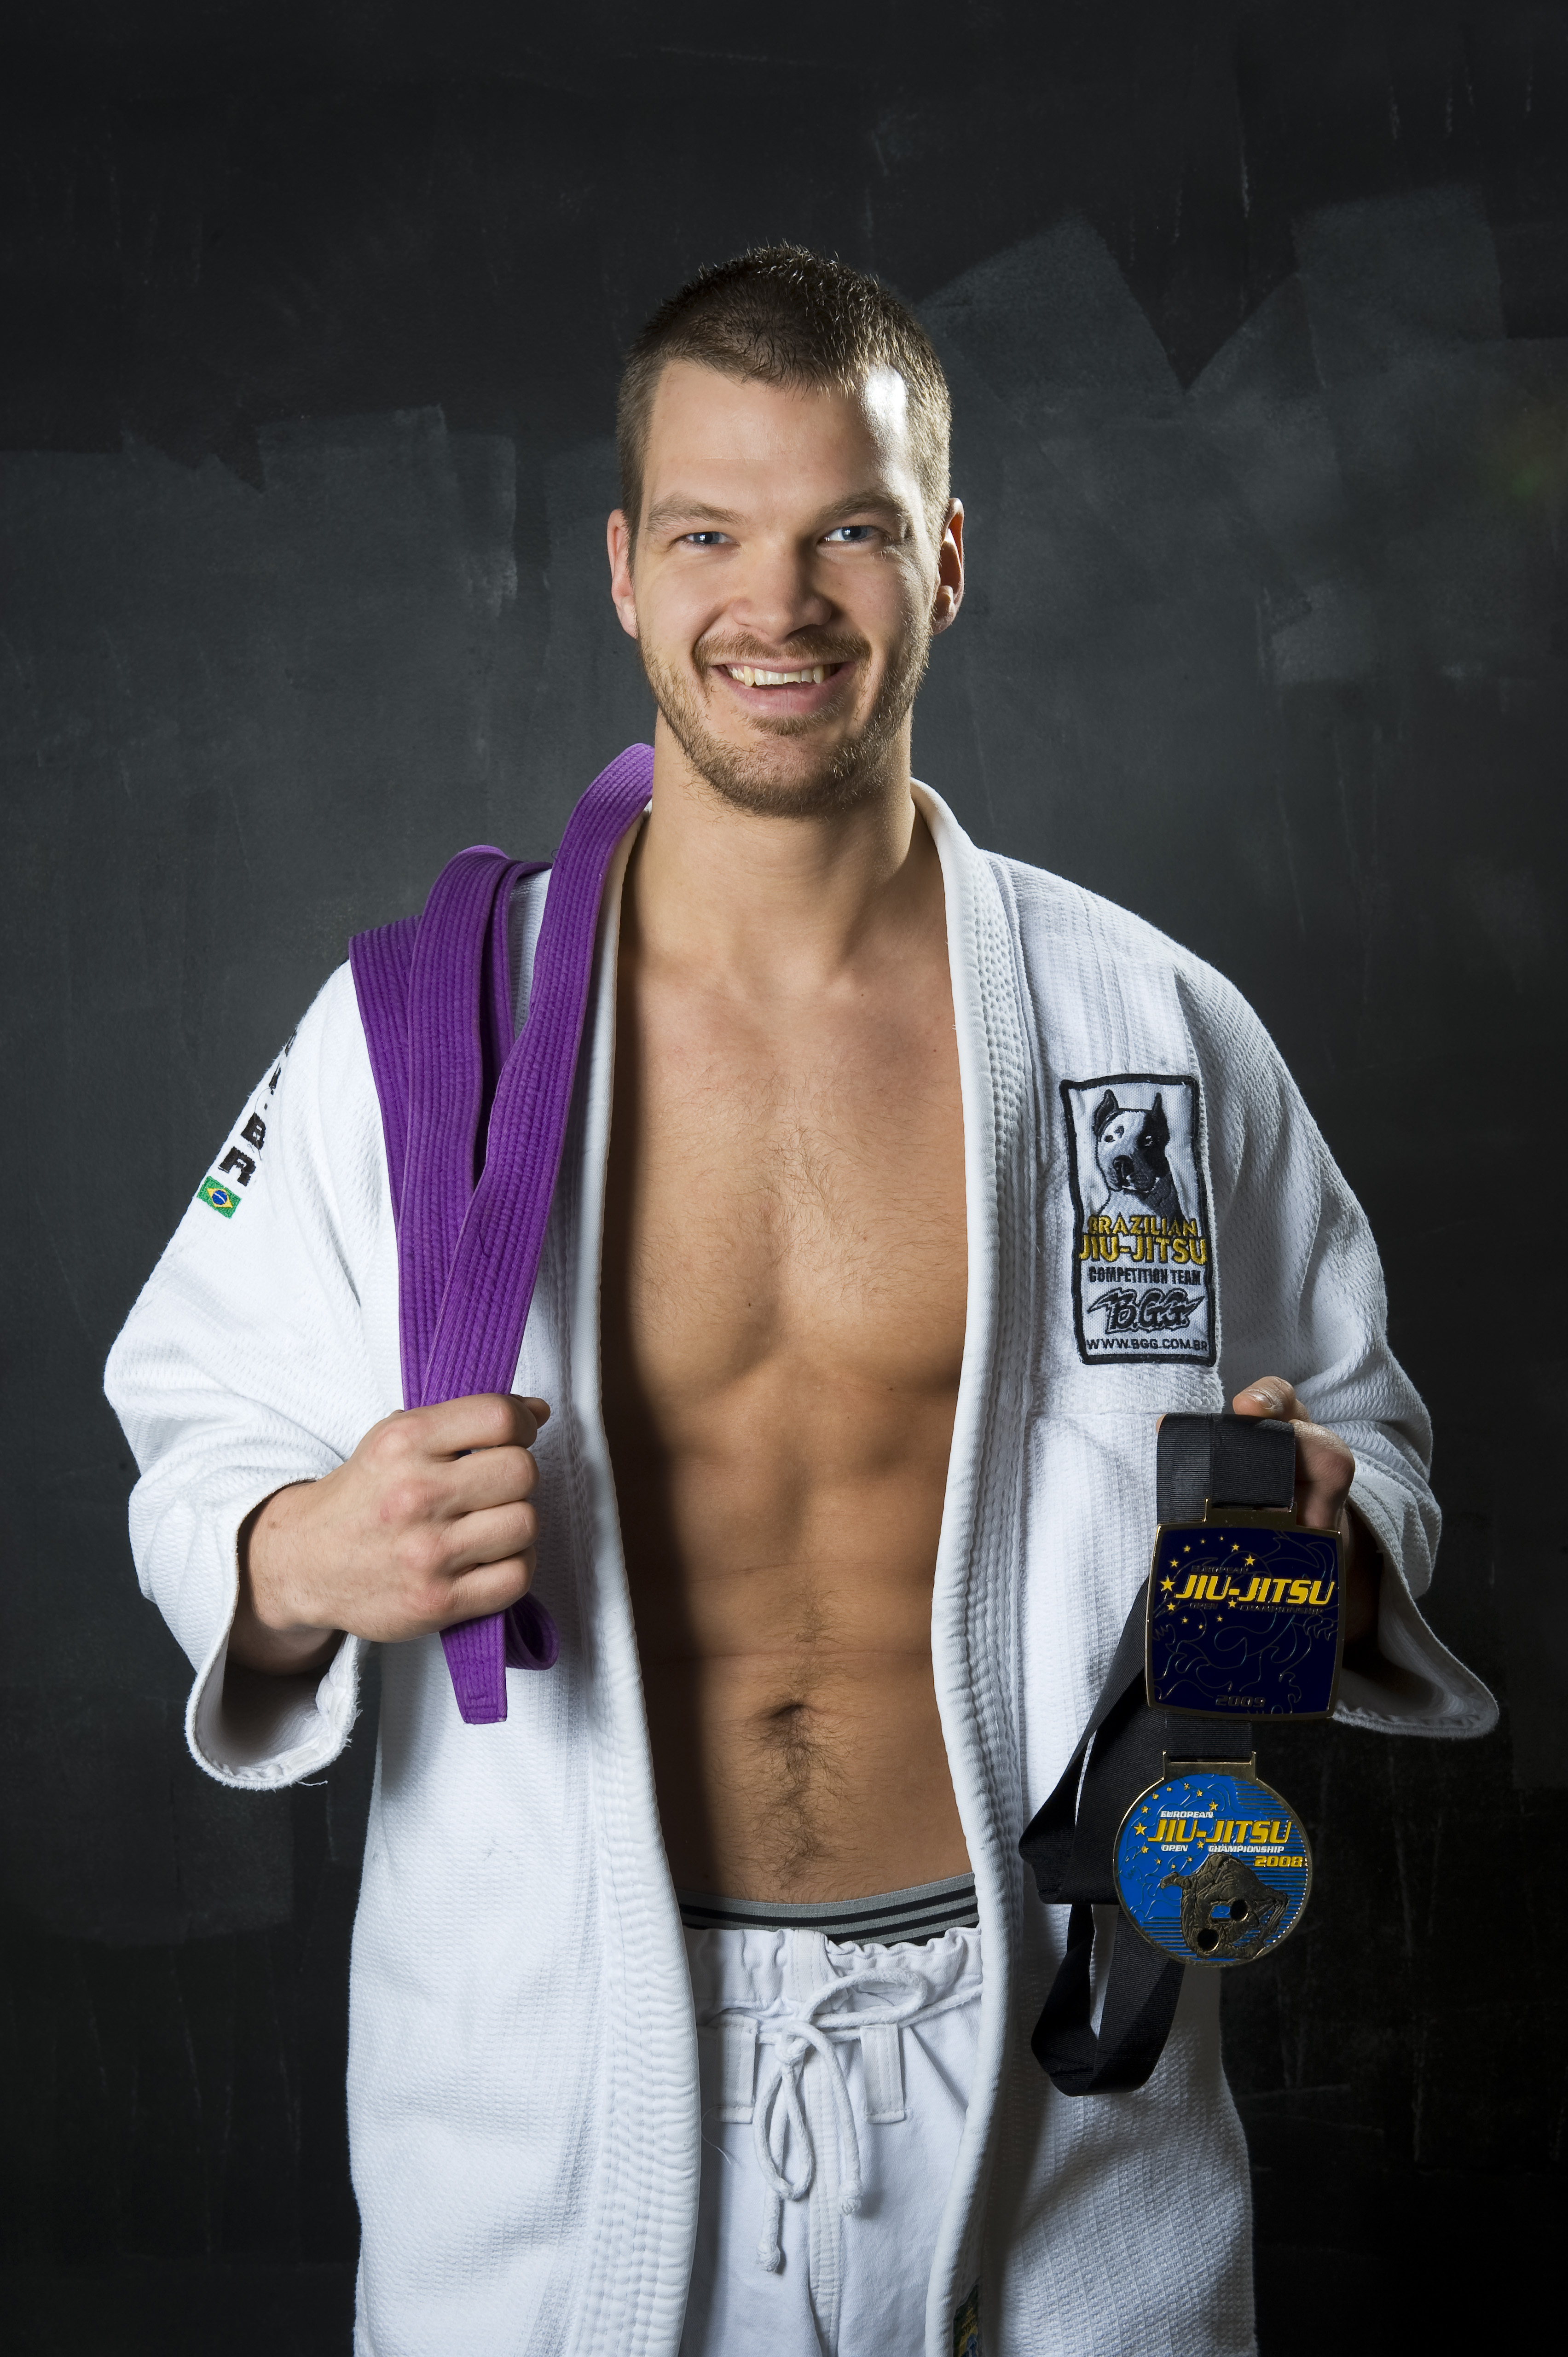 VM, Mikael Knutsson, Submission wrestling, Eddy Bengtsson